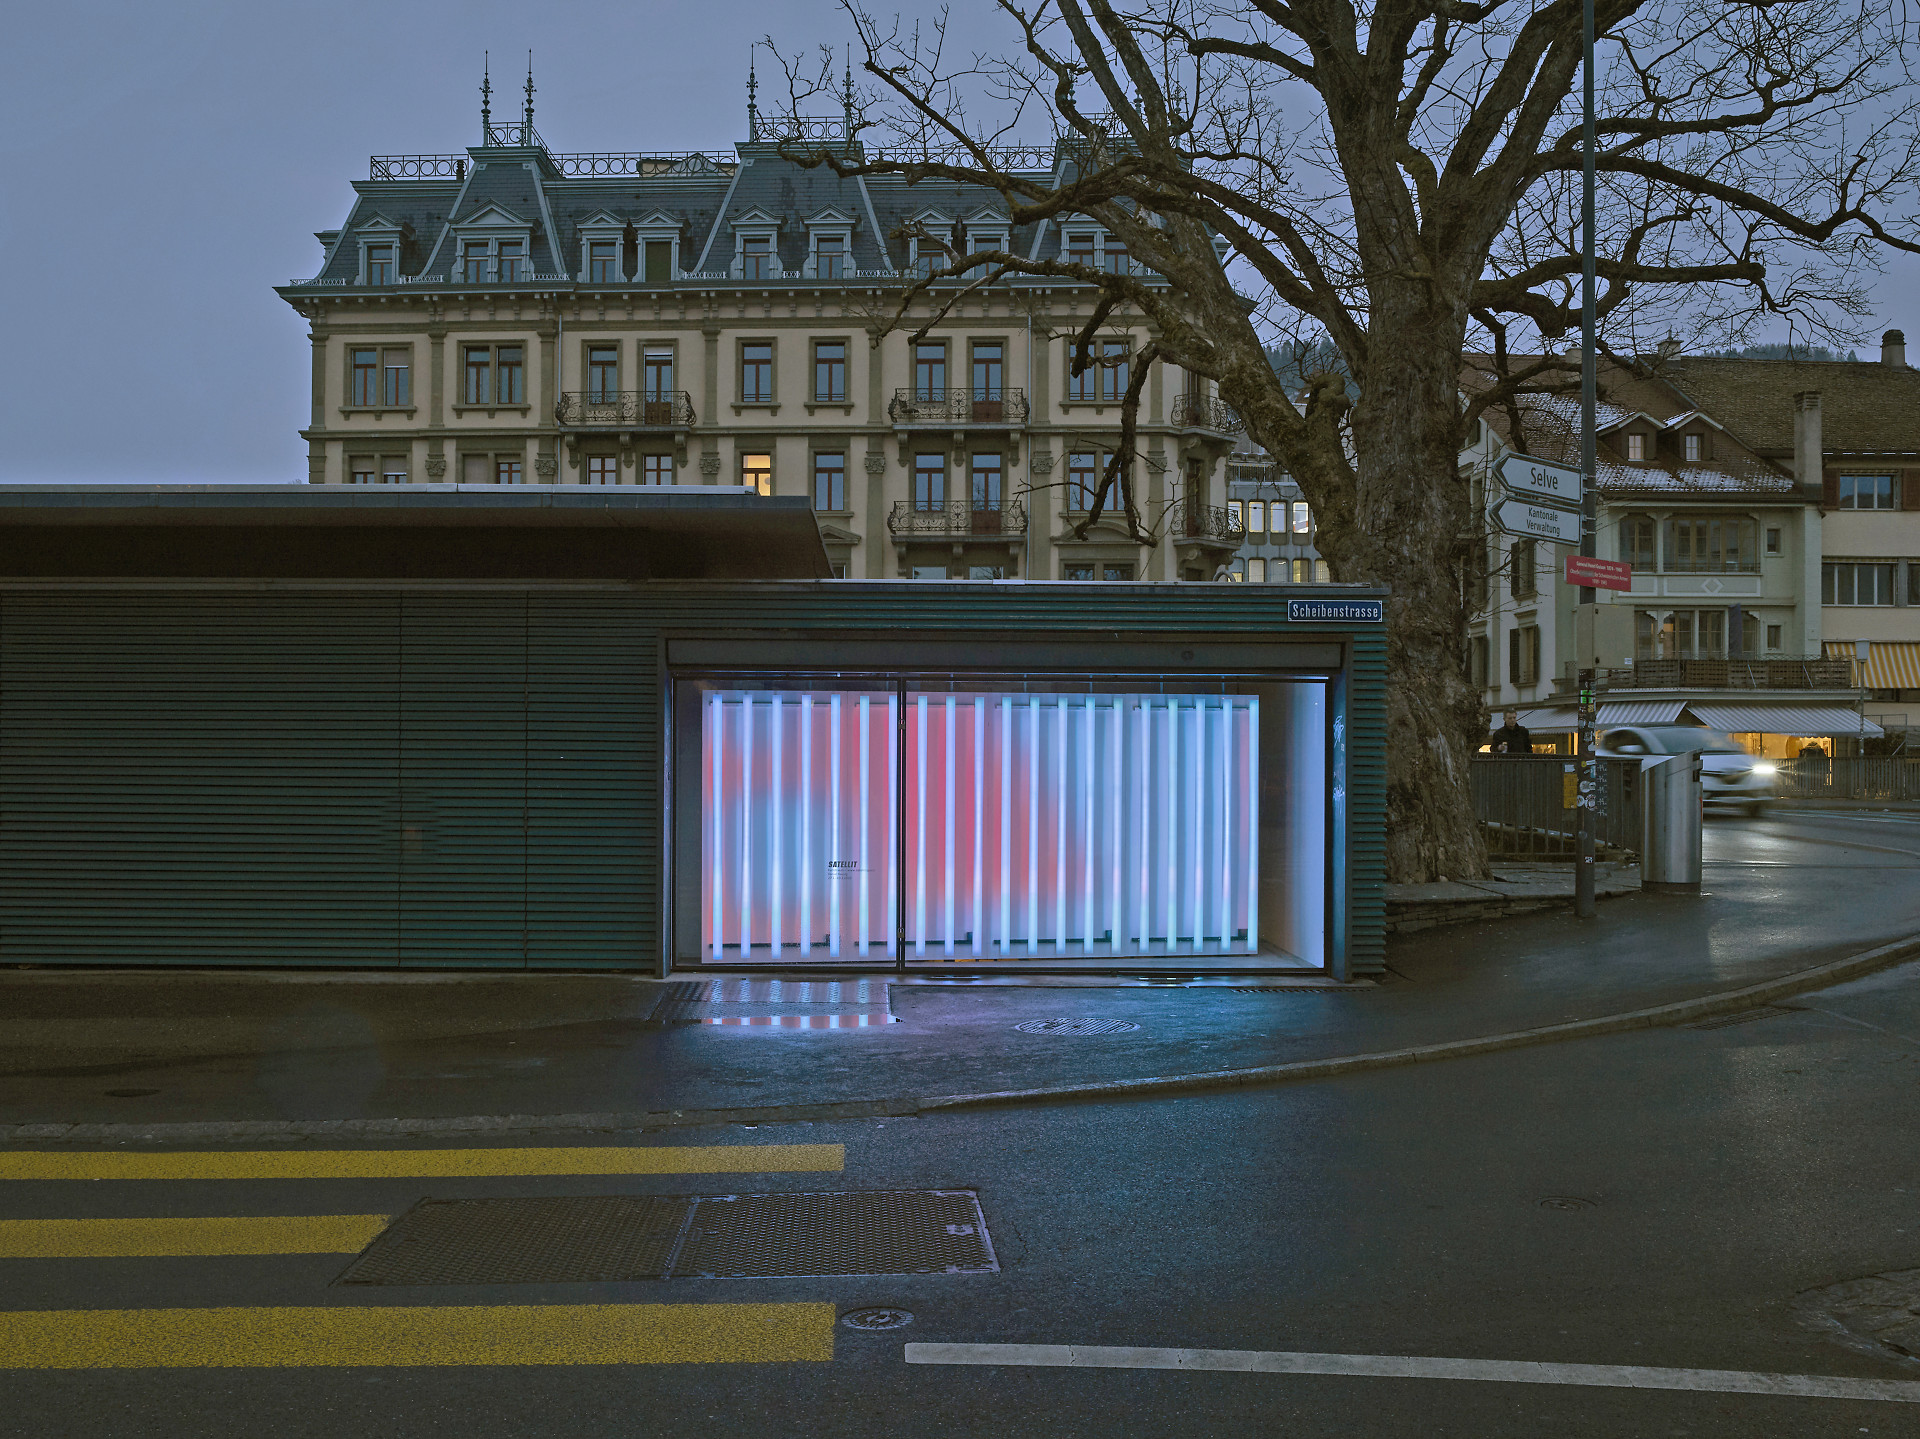 daniel_hausig_wetterleuchten_5_light-art-installation